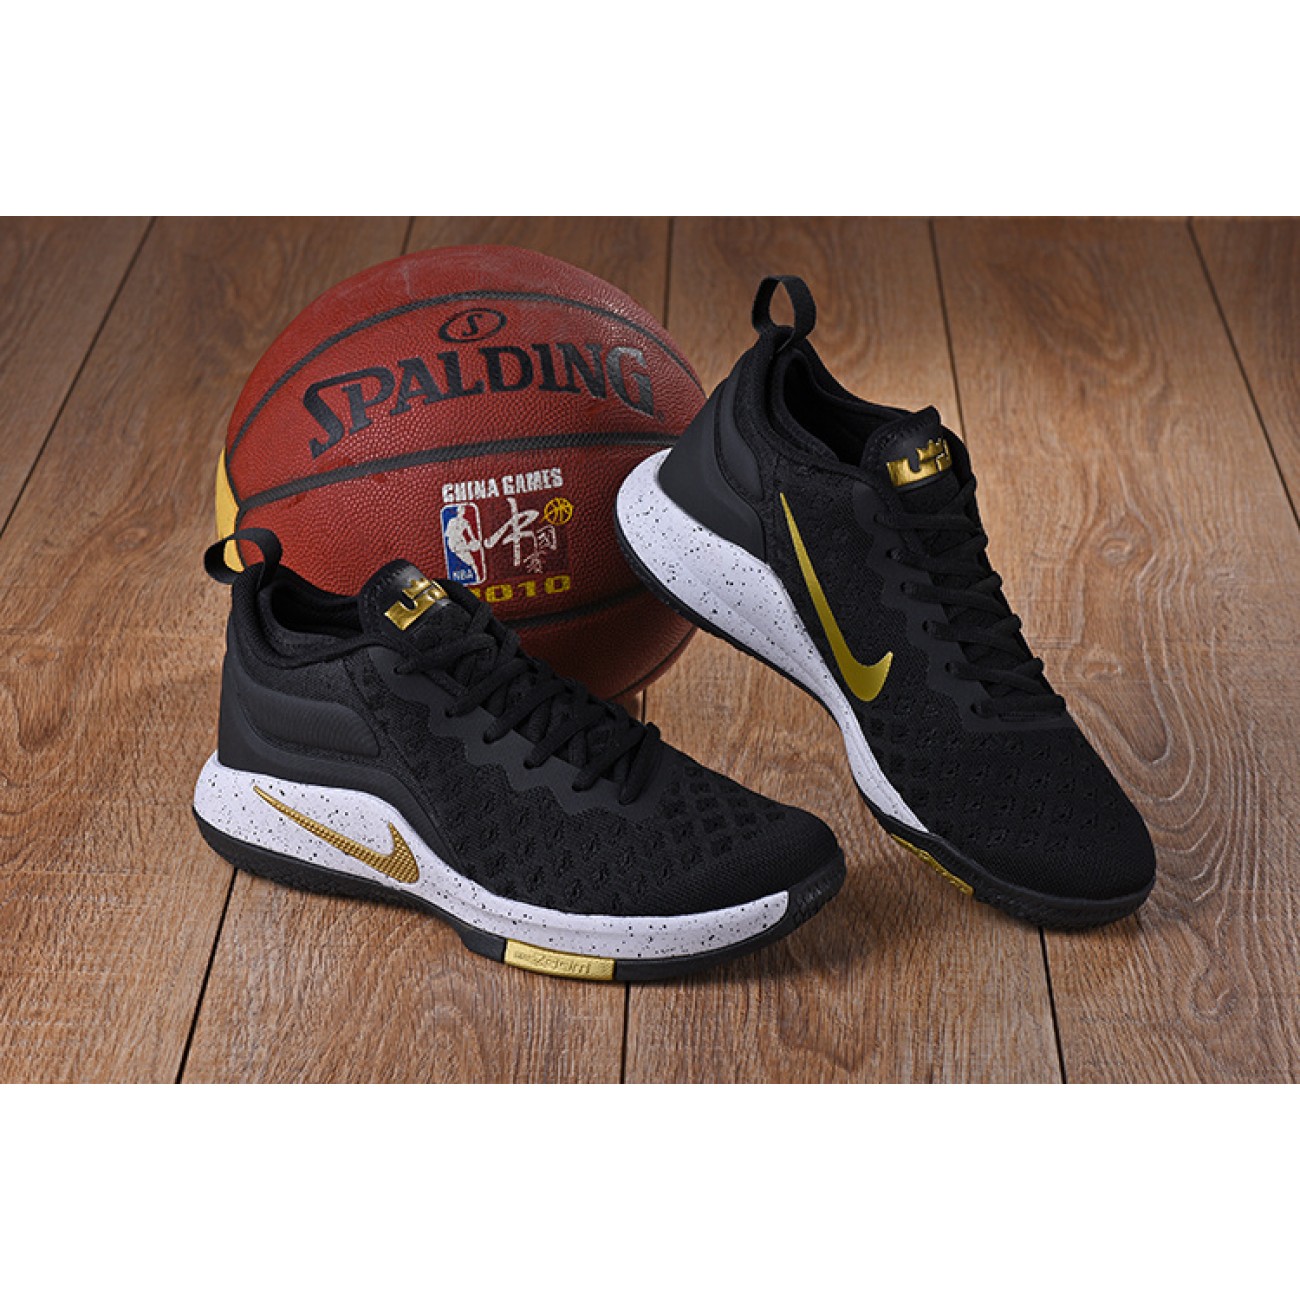 Lebron Witness 2 Flyknit Basketball Shoes Black/Gold